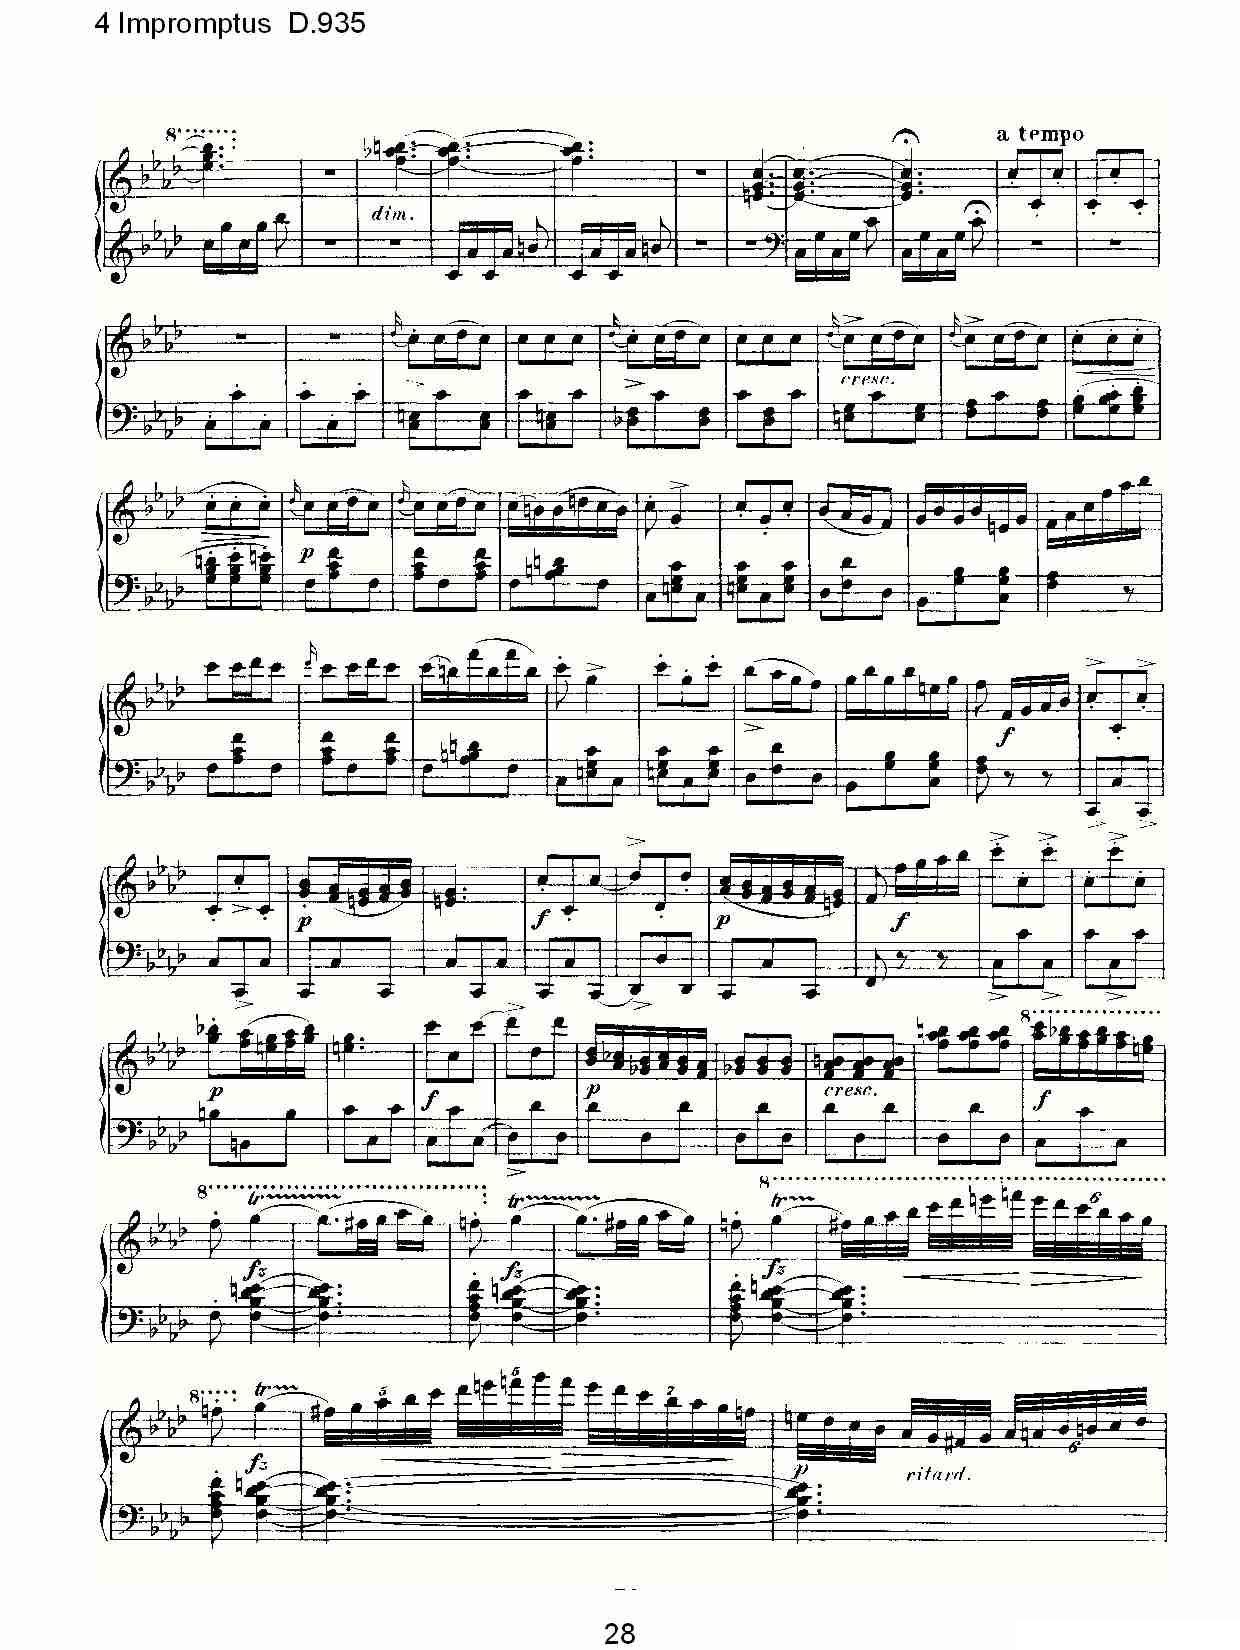 4 Impromptus D.935（4人即兴演奏D.935）钢琴曲谱（图28）